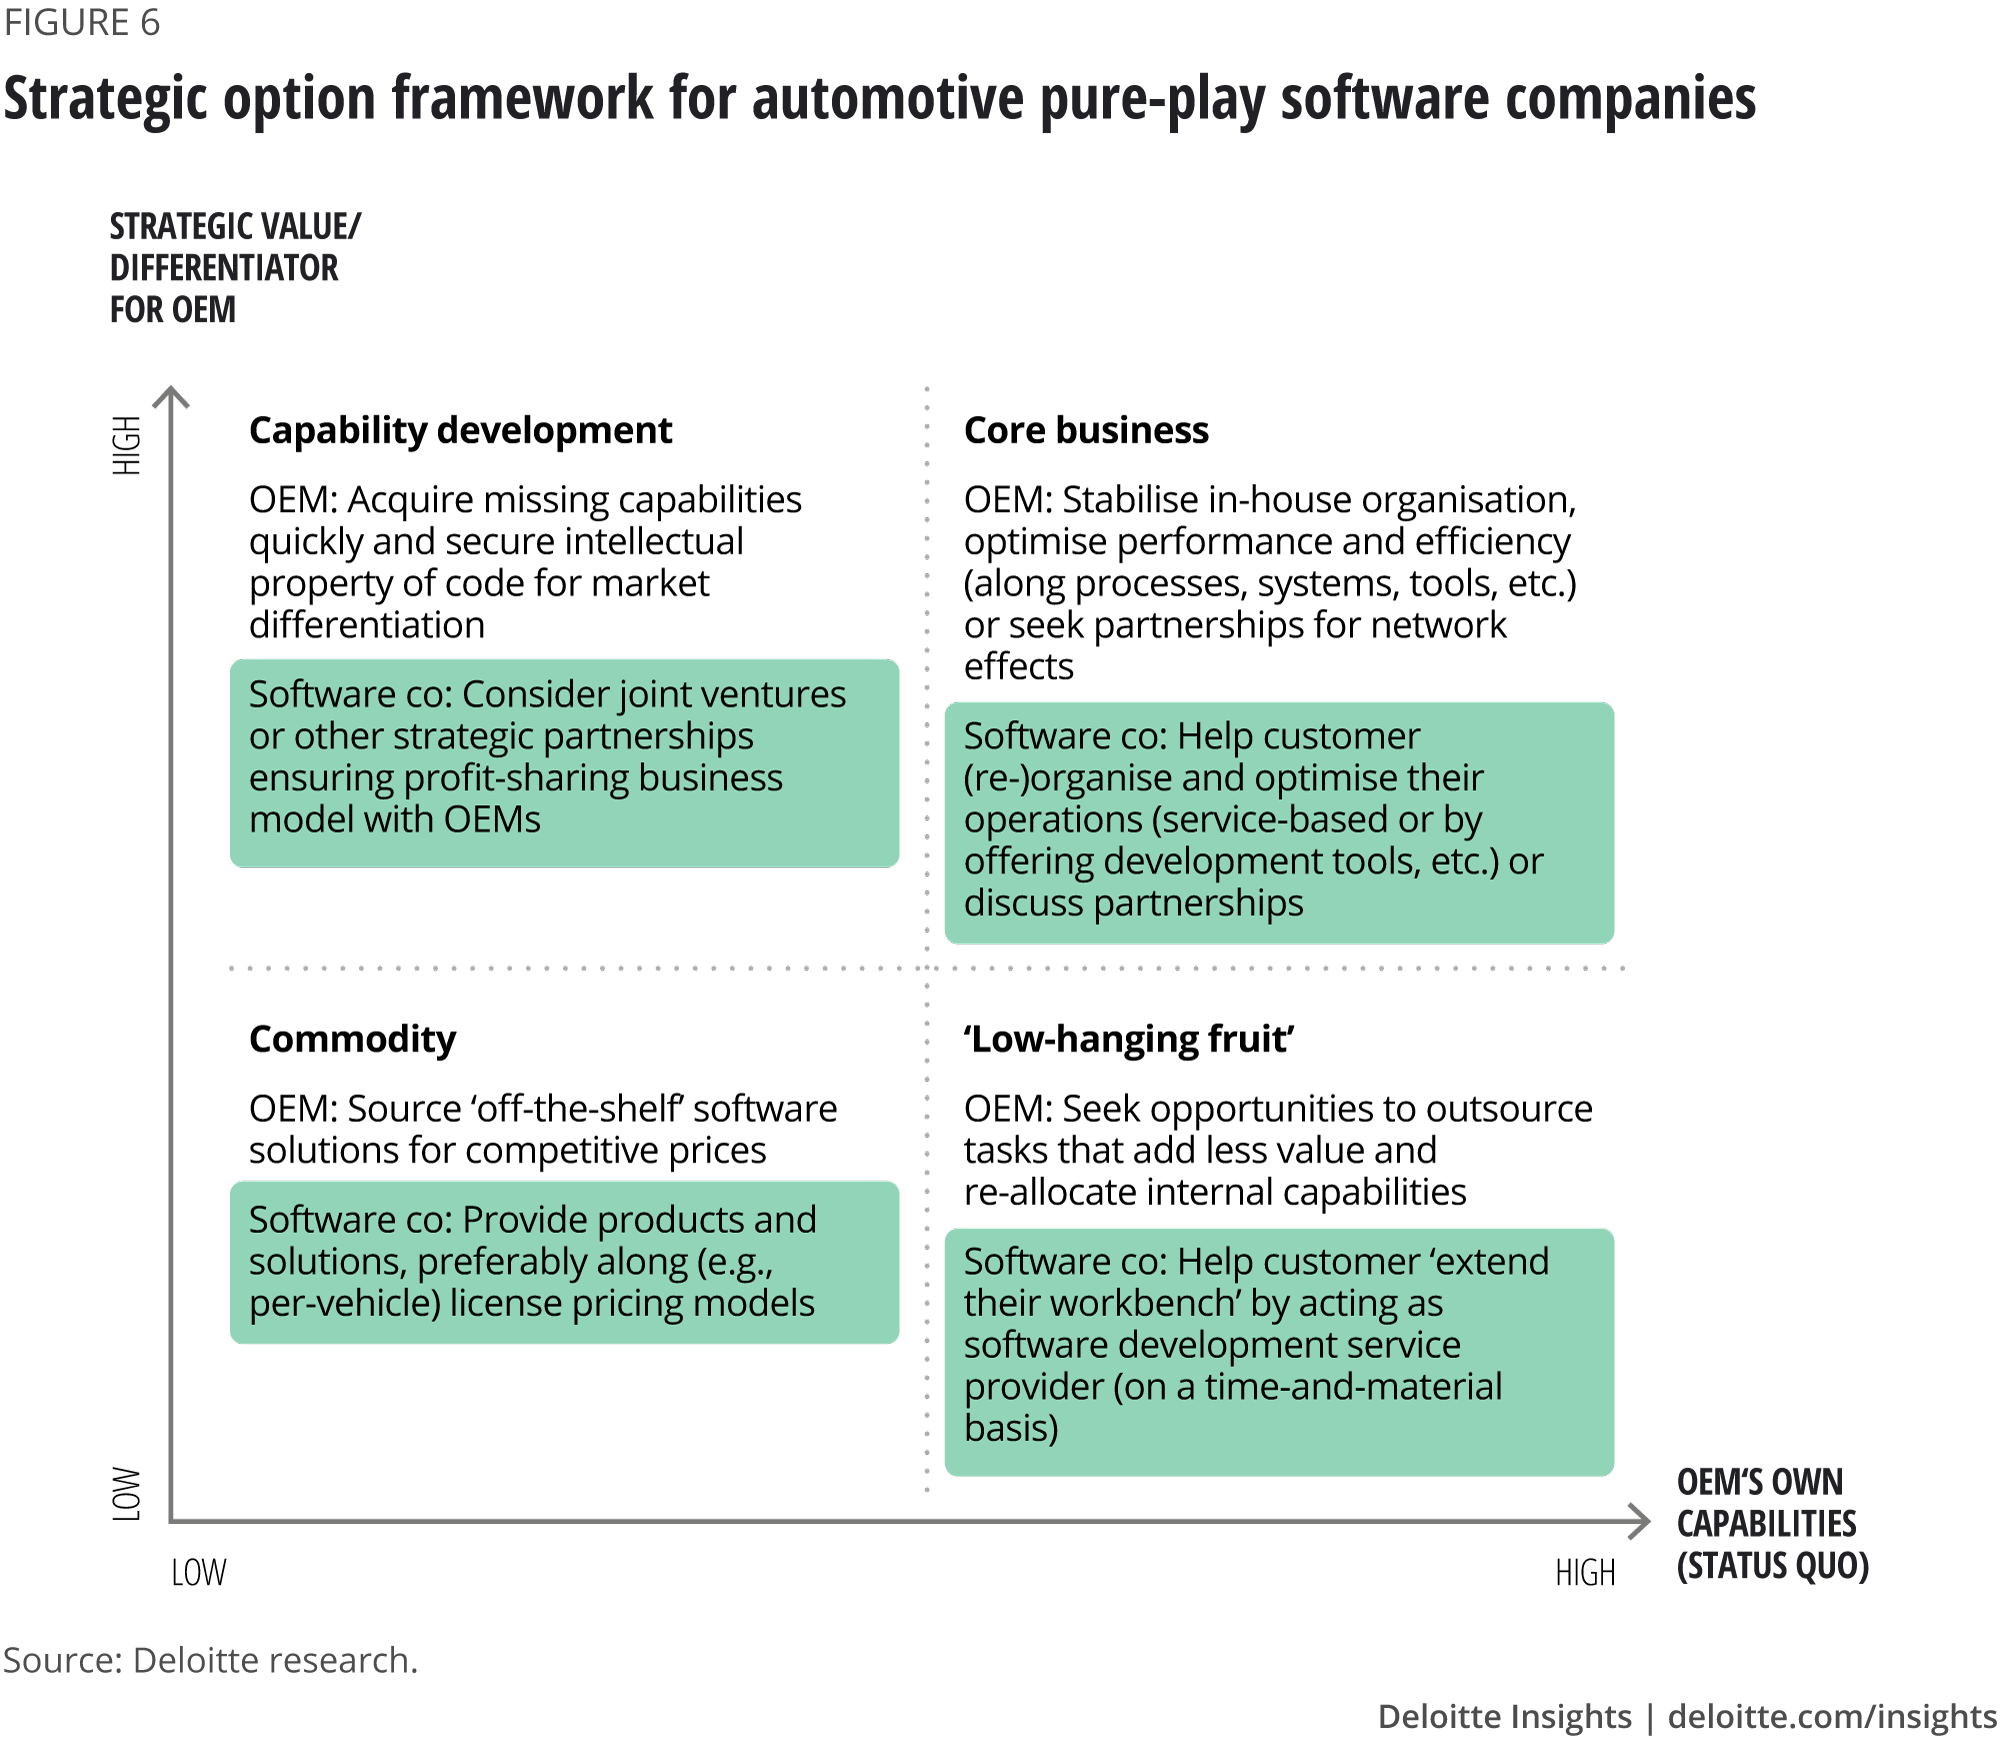 Strategic option framework for automotive pure-play software companies